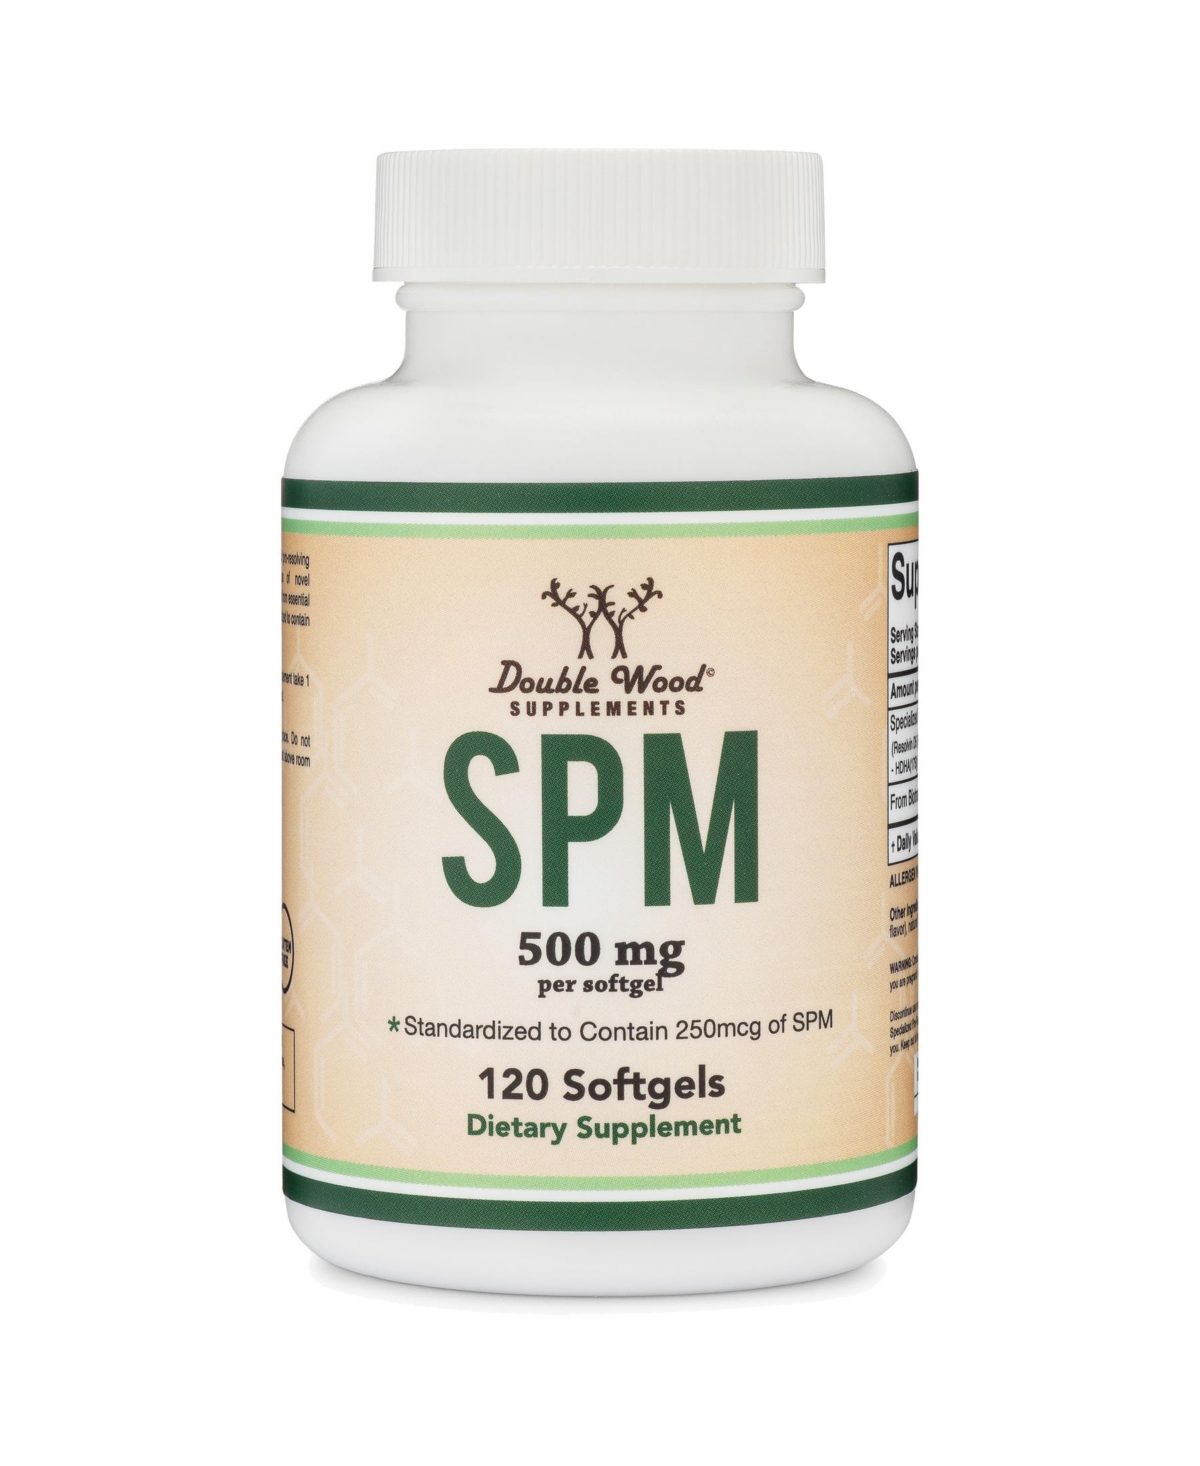 Spm (Pro-Resolving Mediators) - 120 x 500 mg softgels